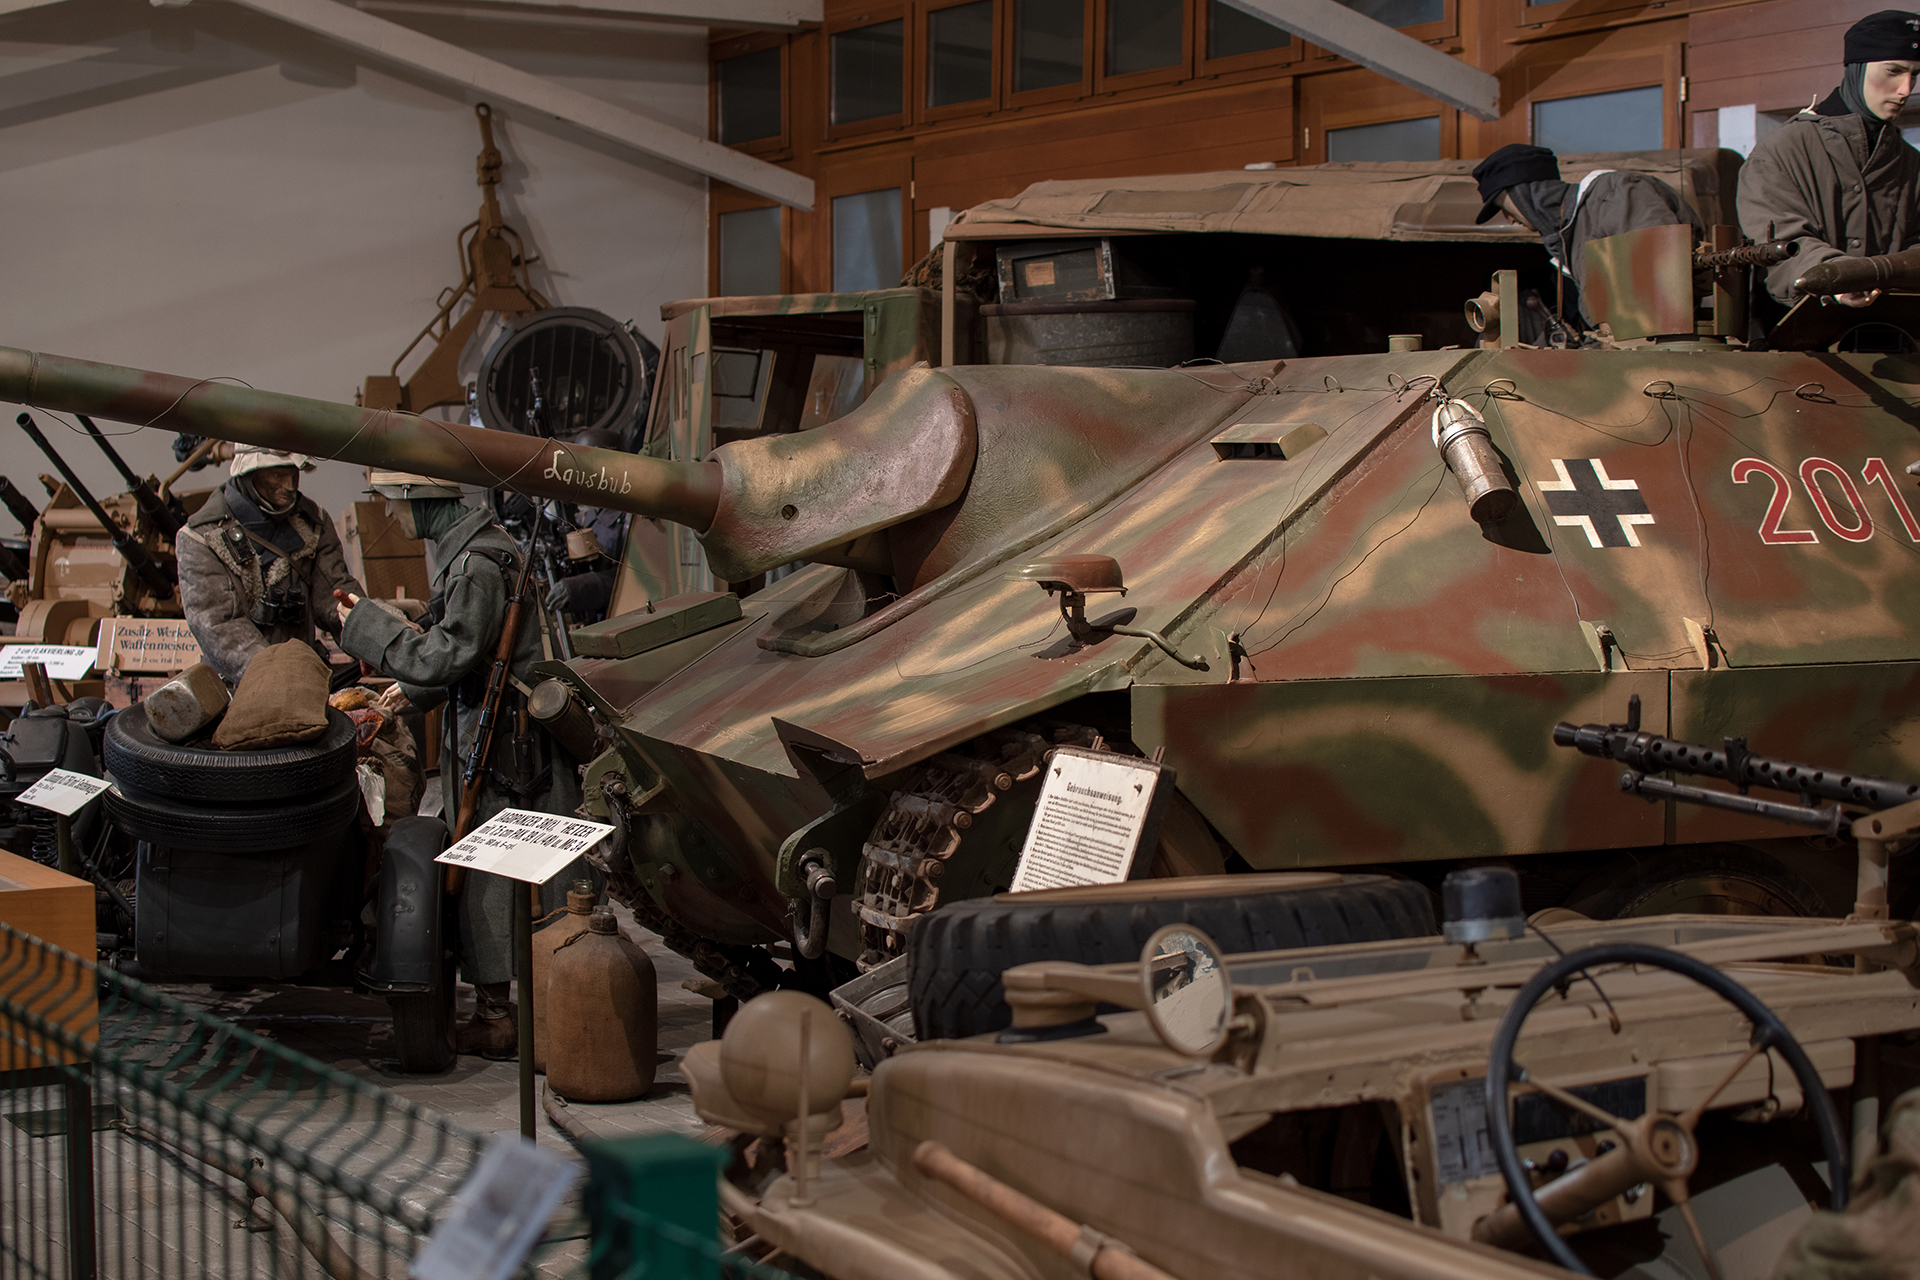 BMM Jagdpanzer 38t 1944 zoom - Musée National d'Histoire Militaire, Diekirch